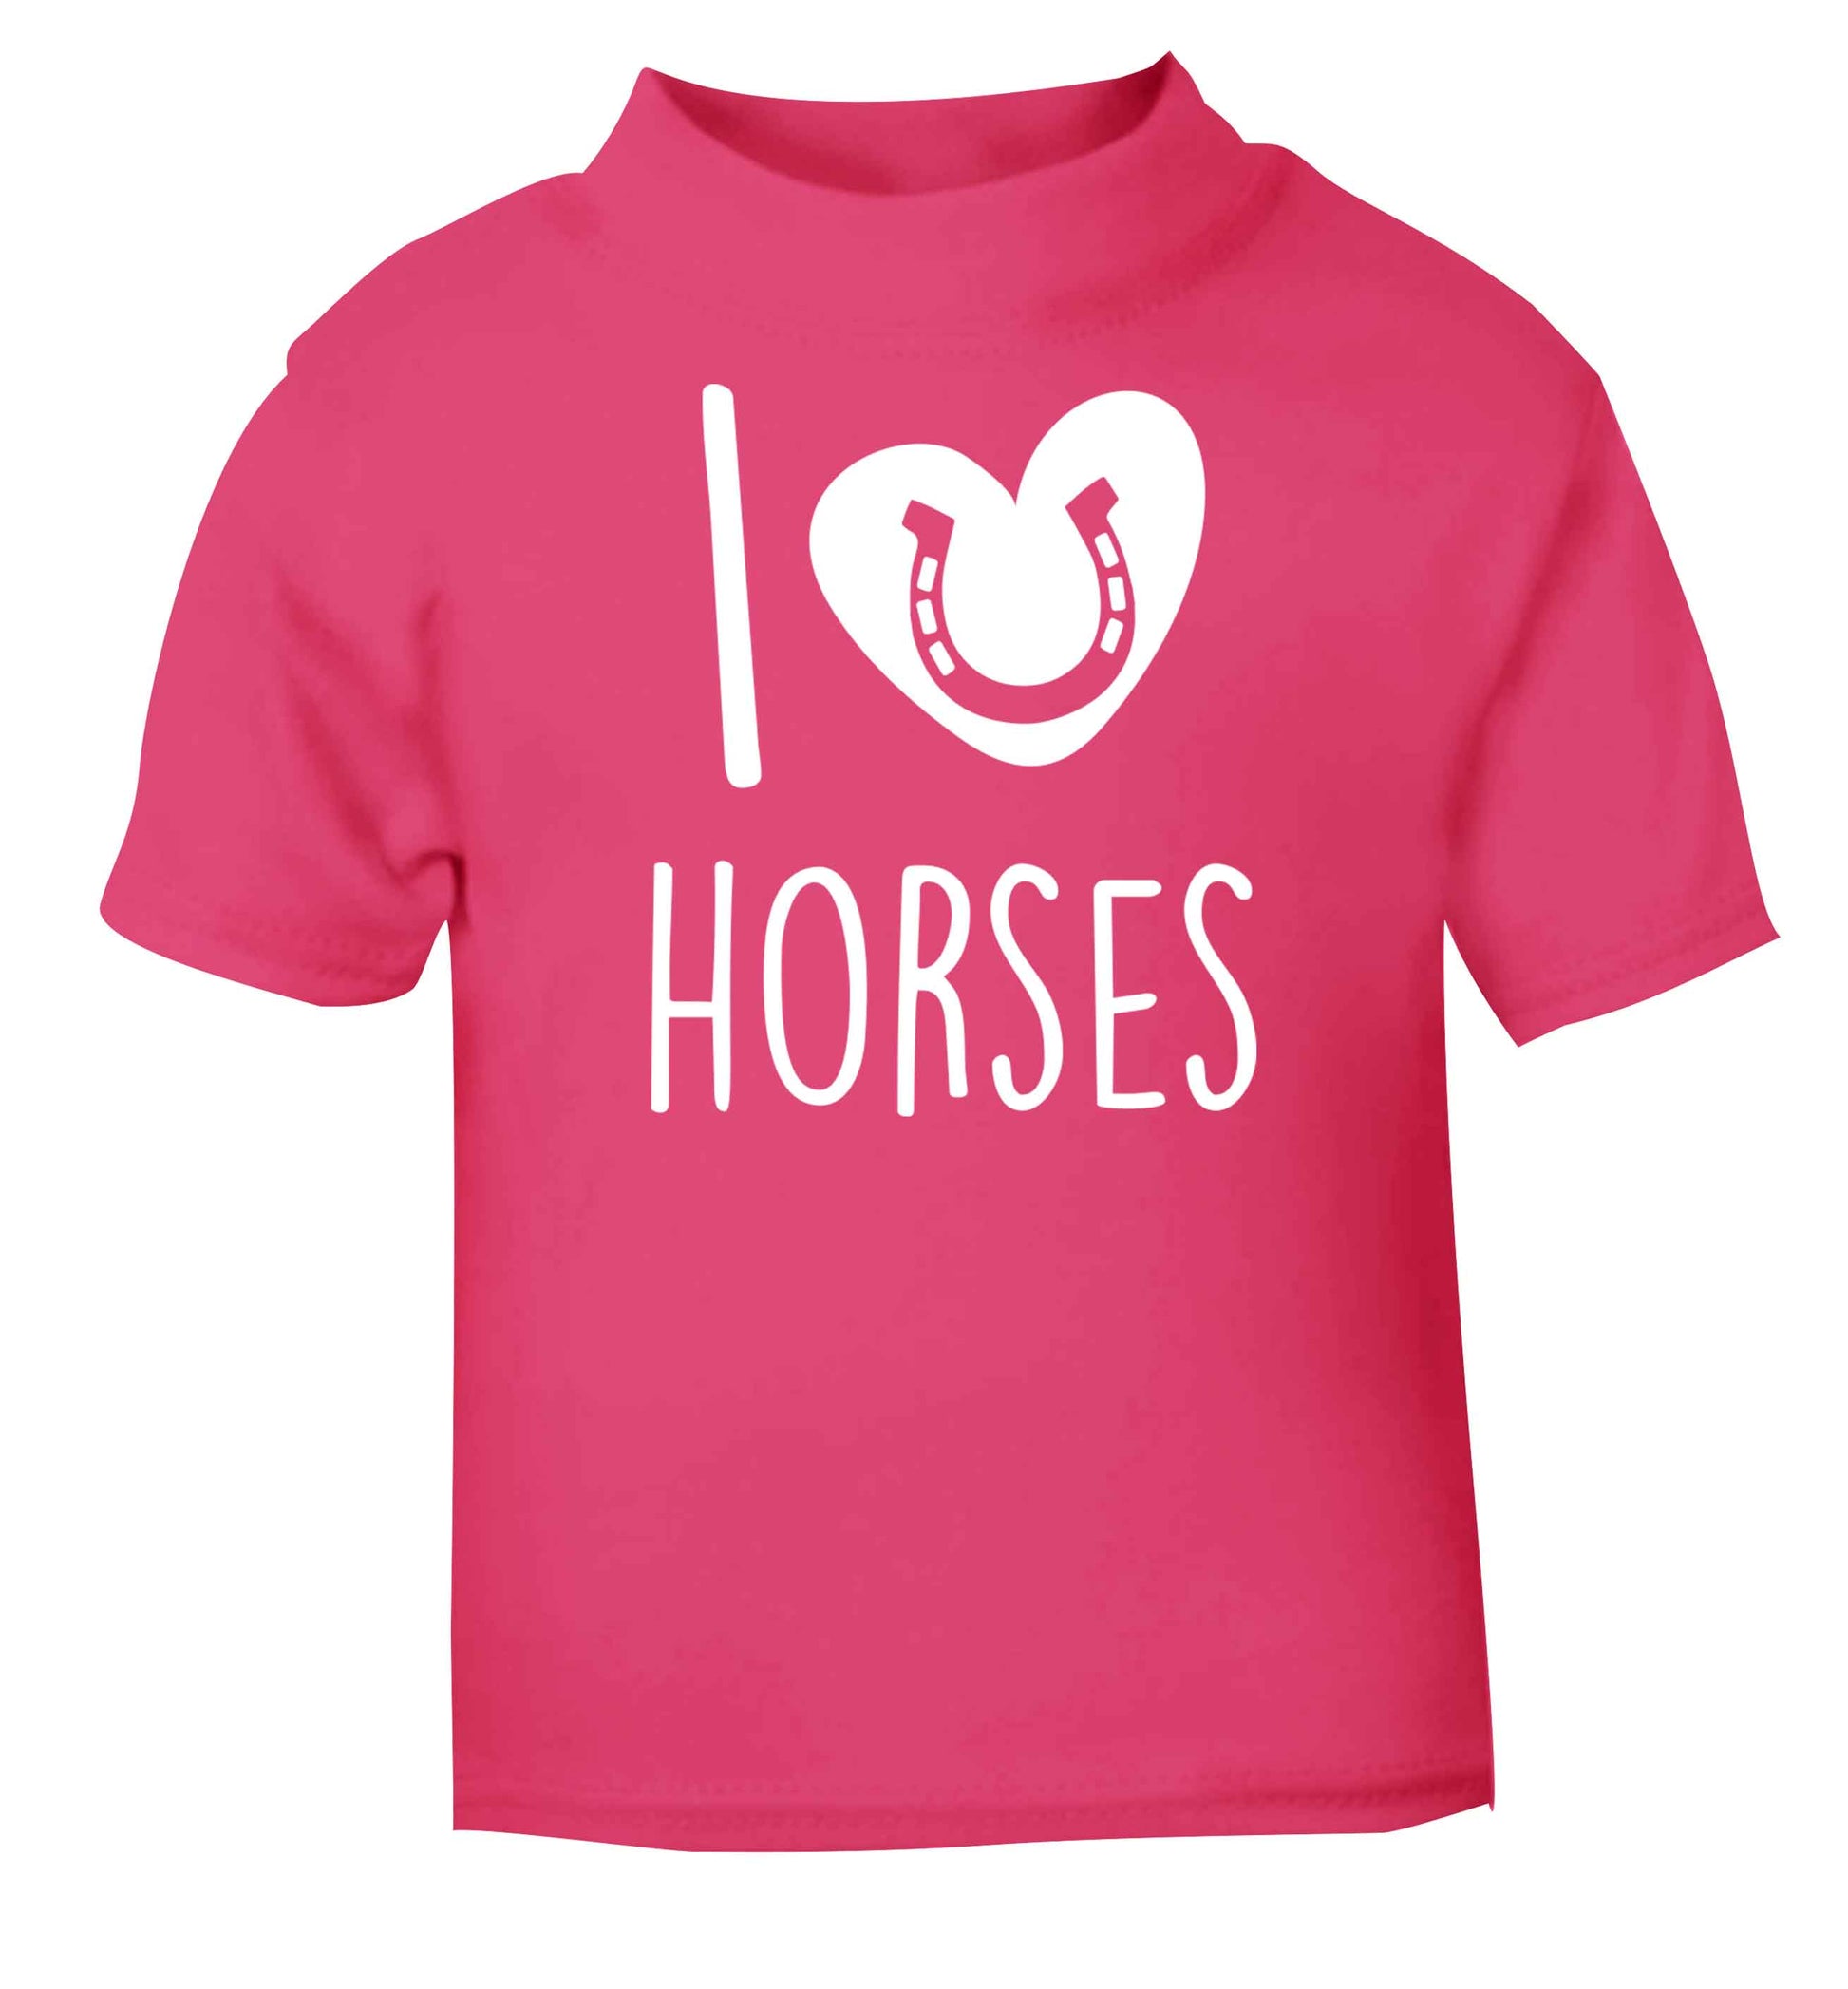 I love horses pink baby toddler Tshirt 2 Years